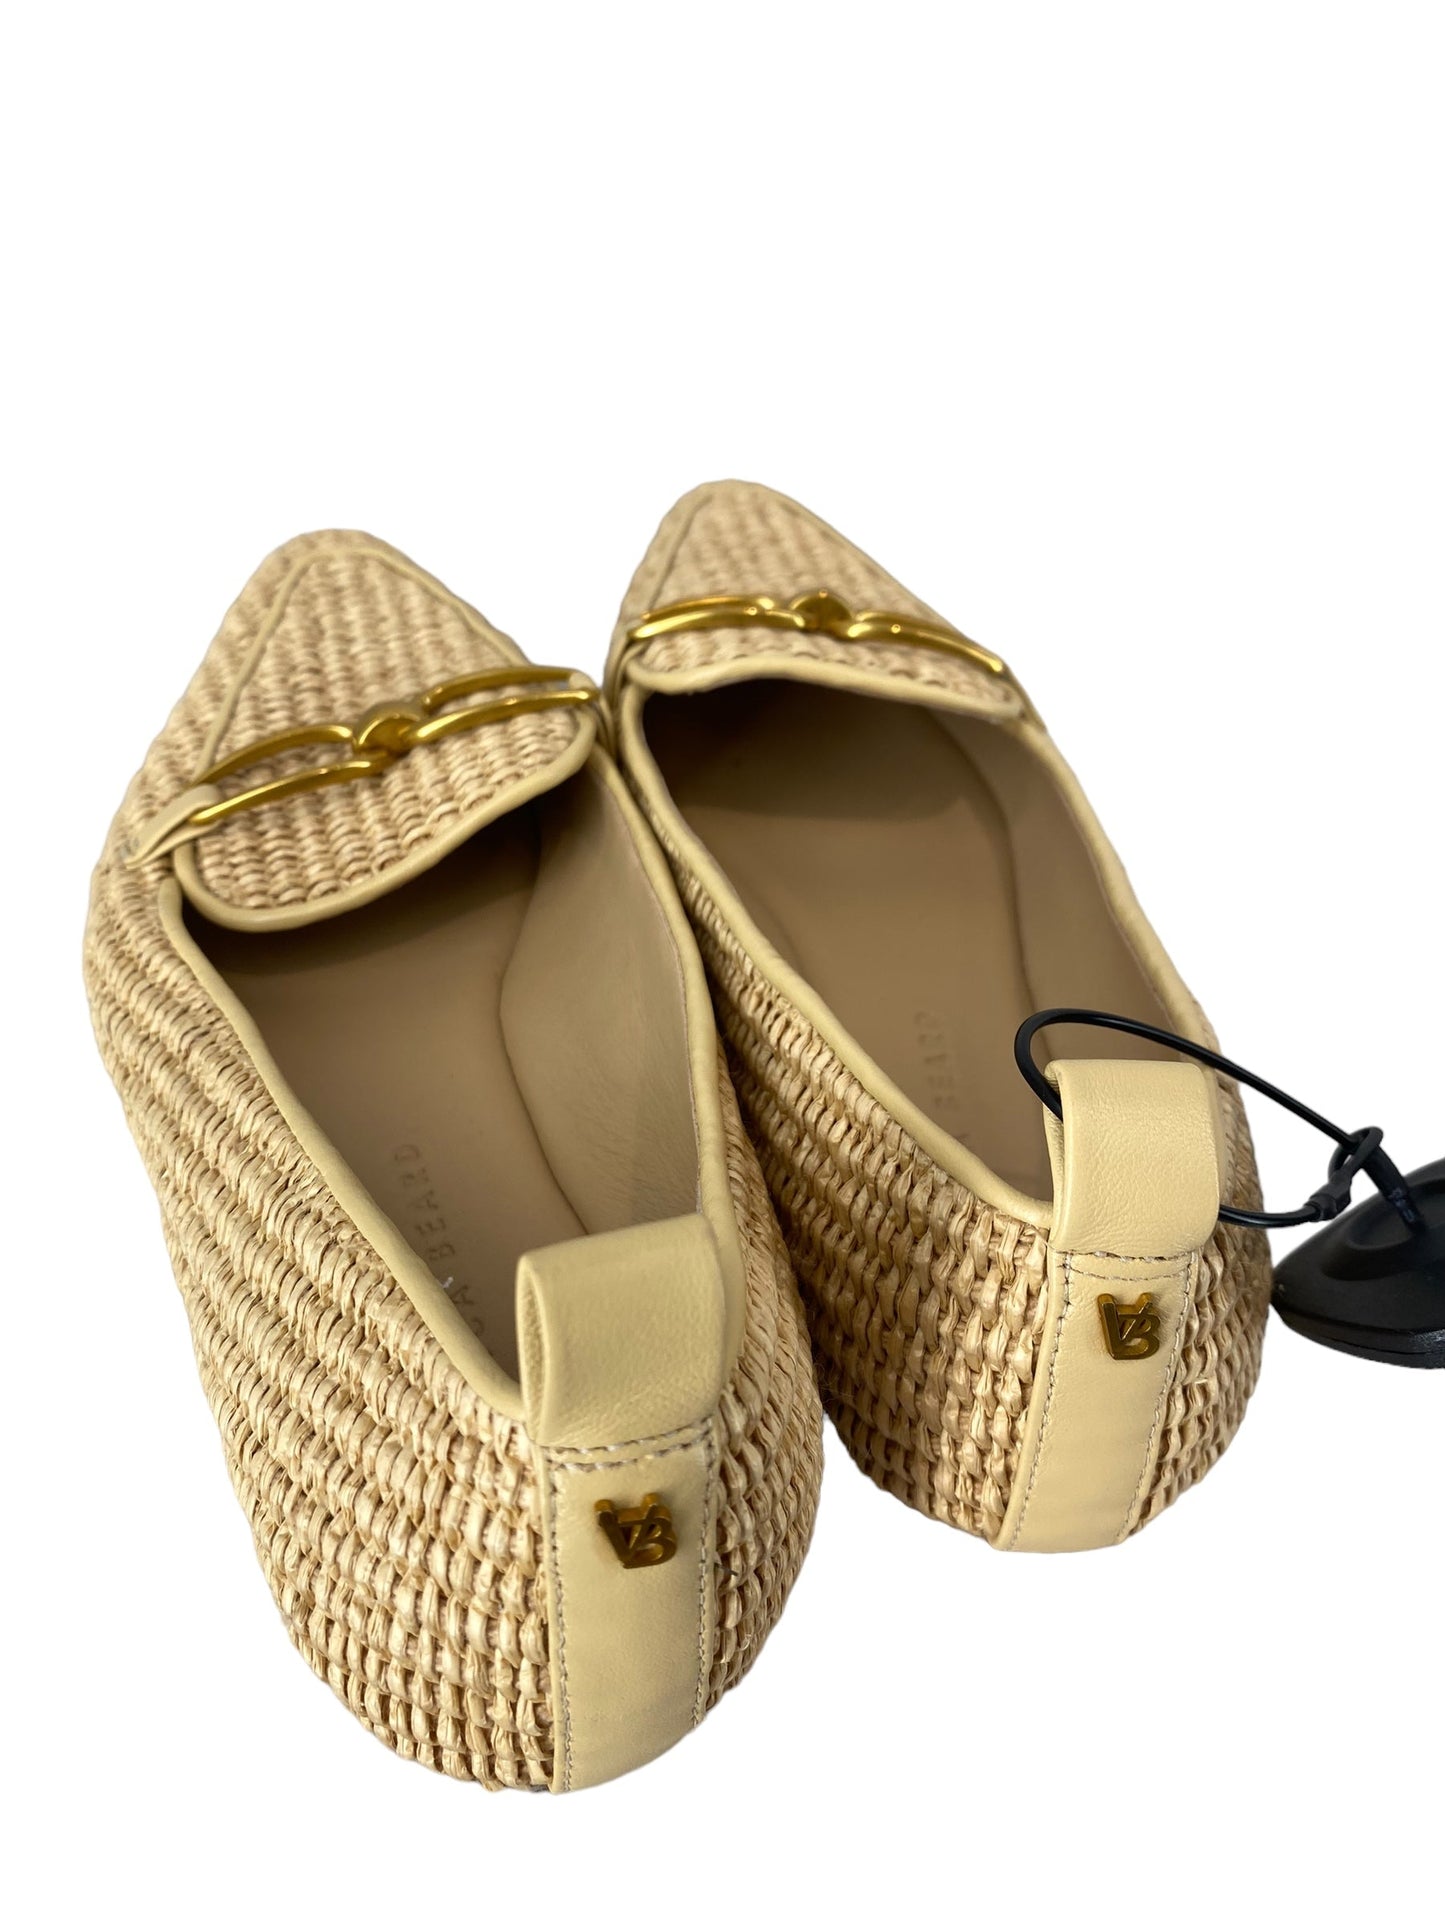 Tan Shoes Flats Veronica Beard, Size 7